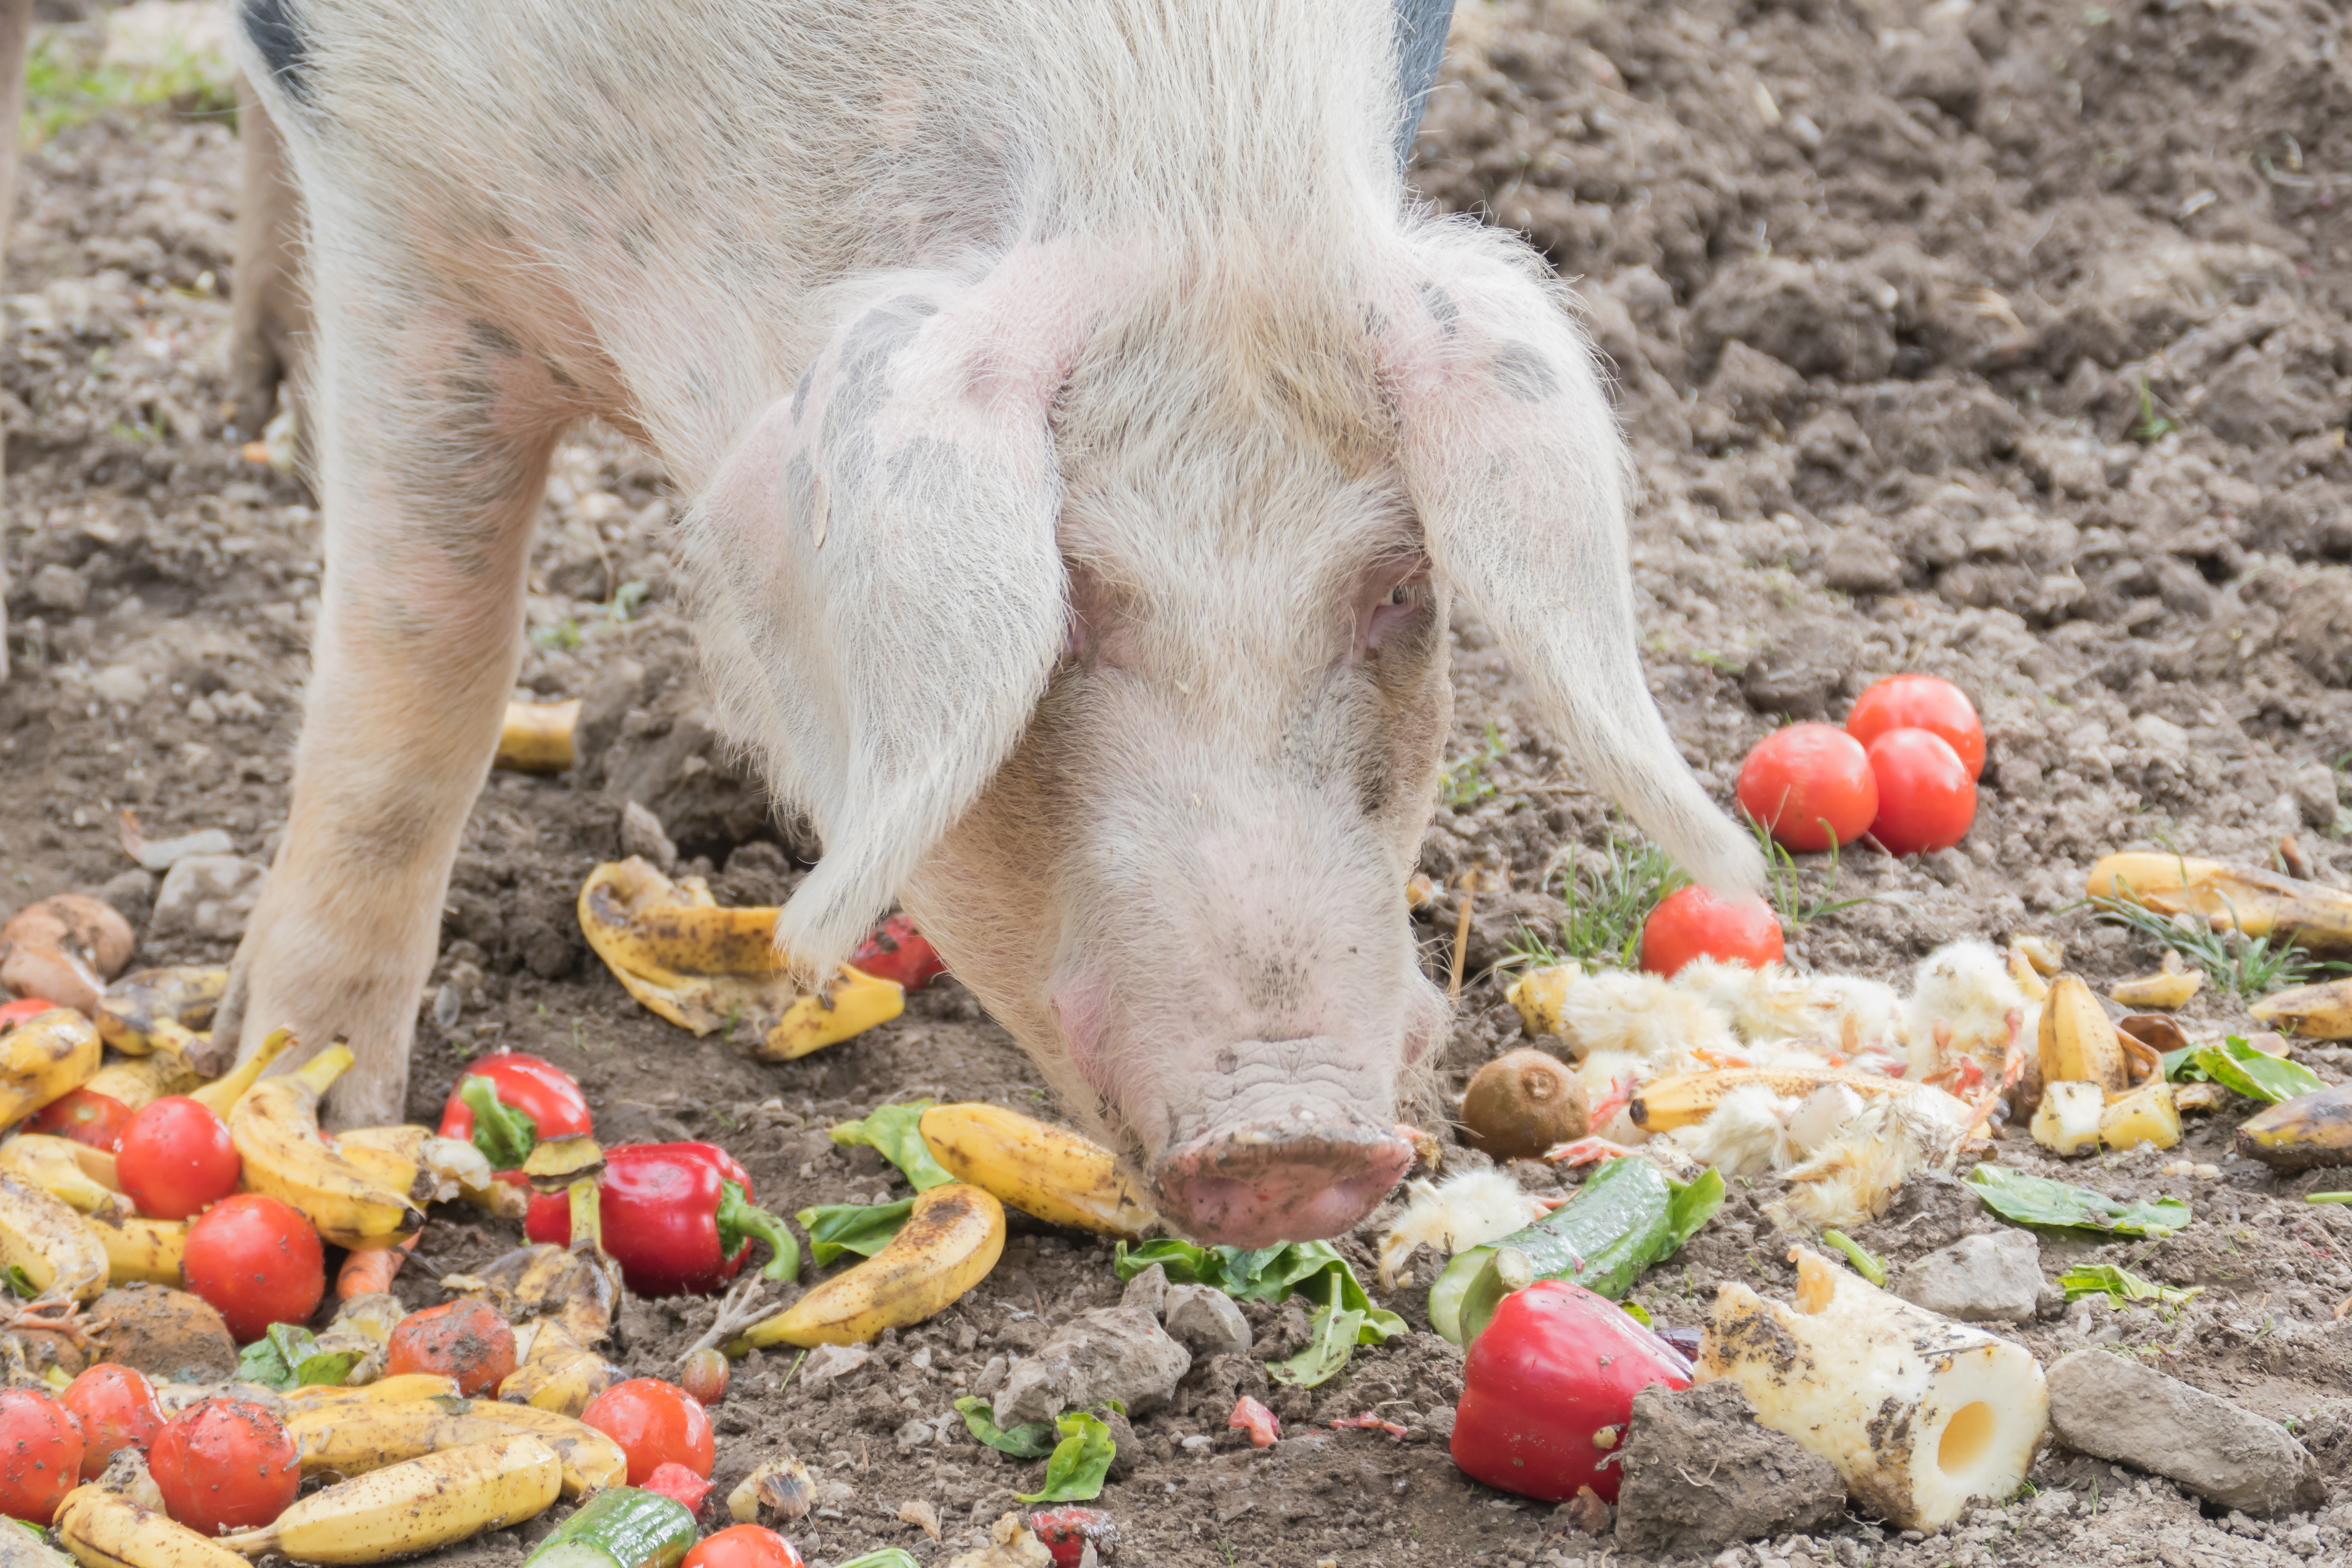 pig eating fruit and vegetables floor feeding